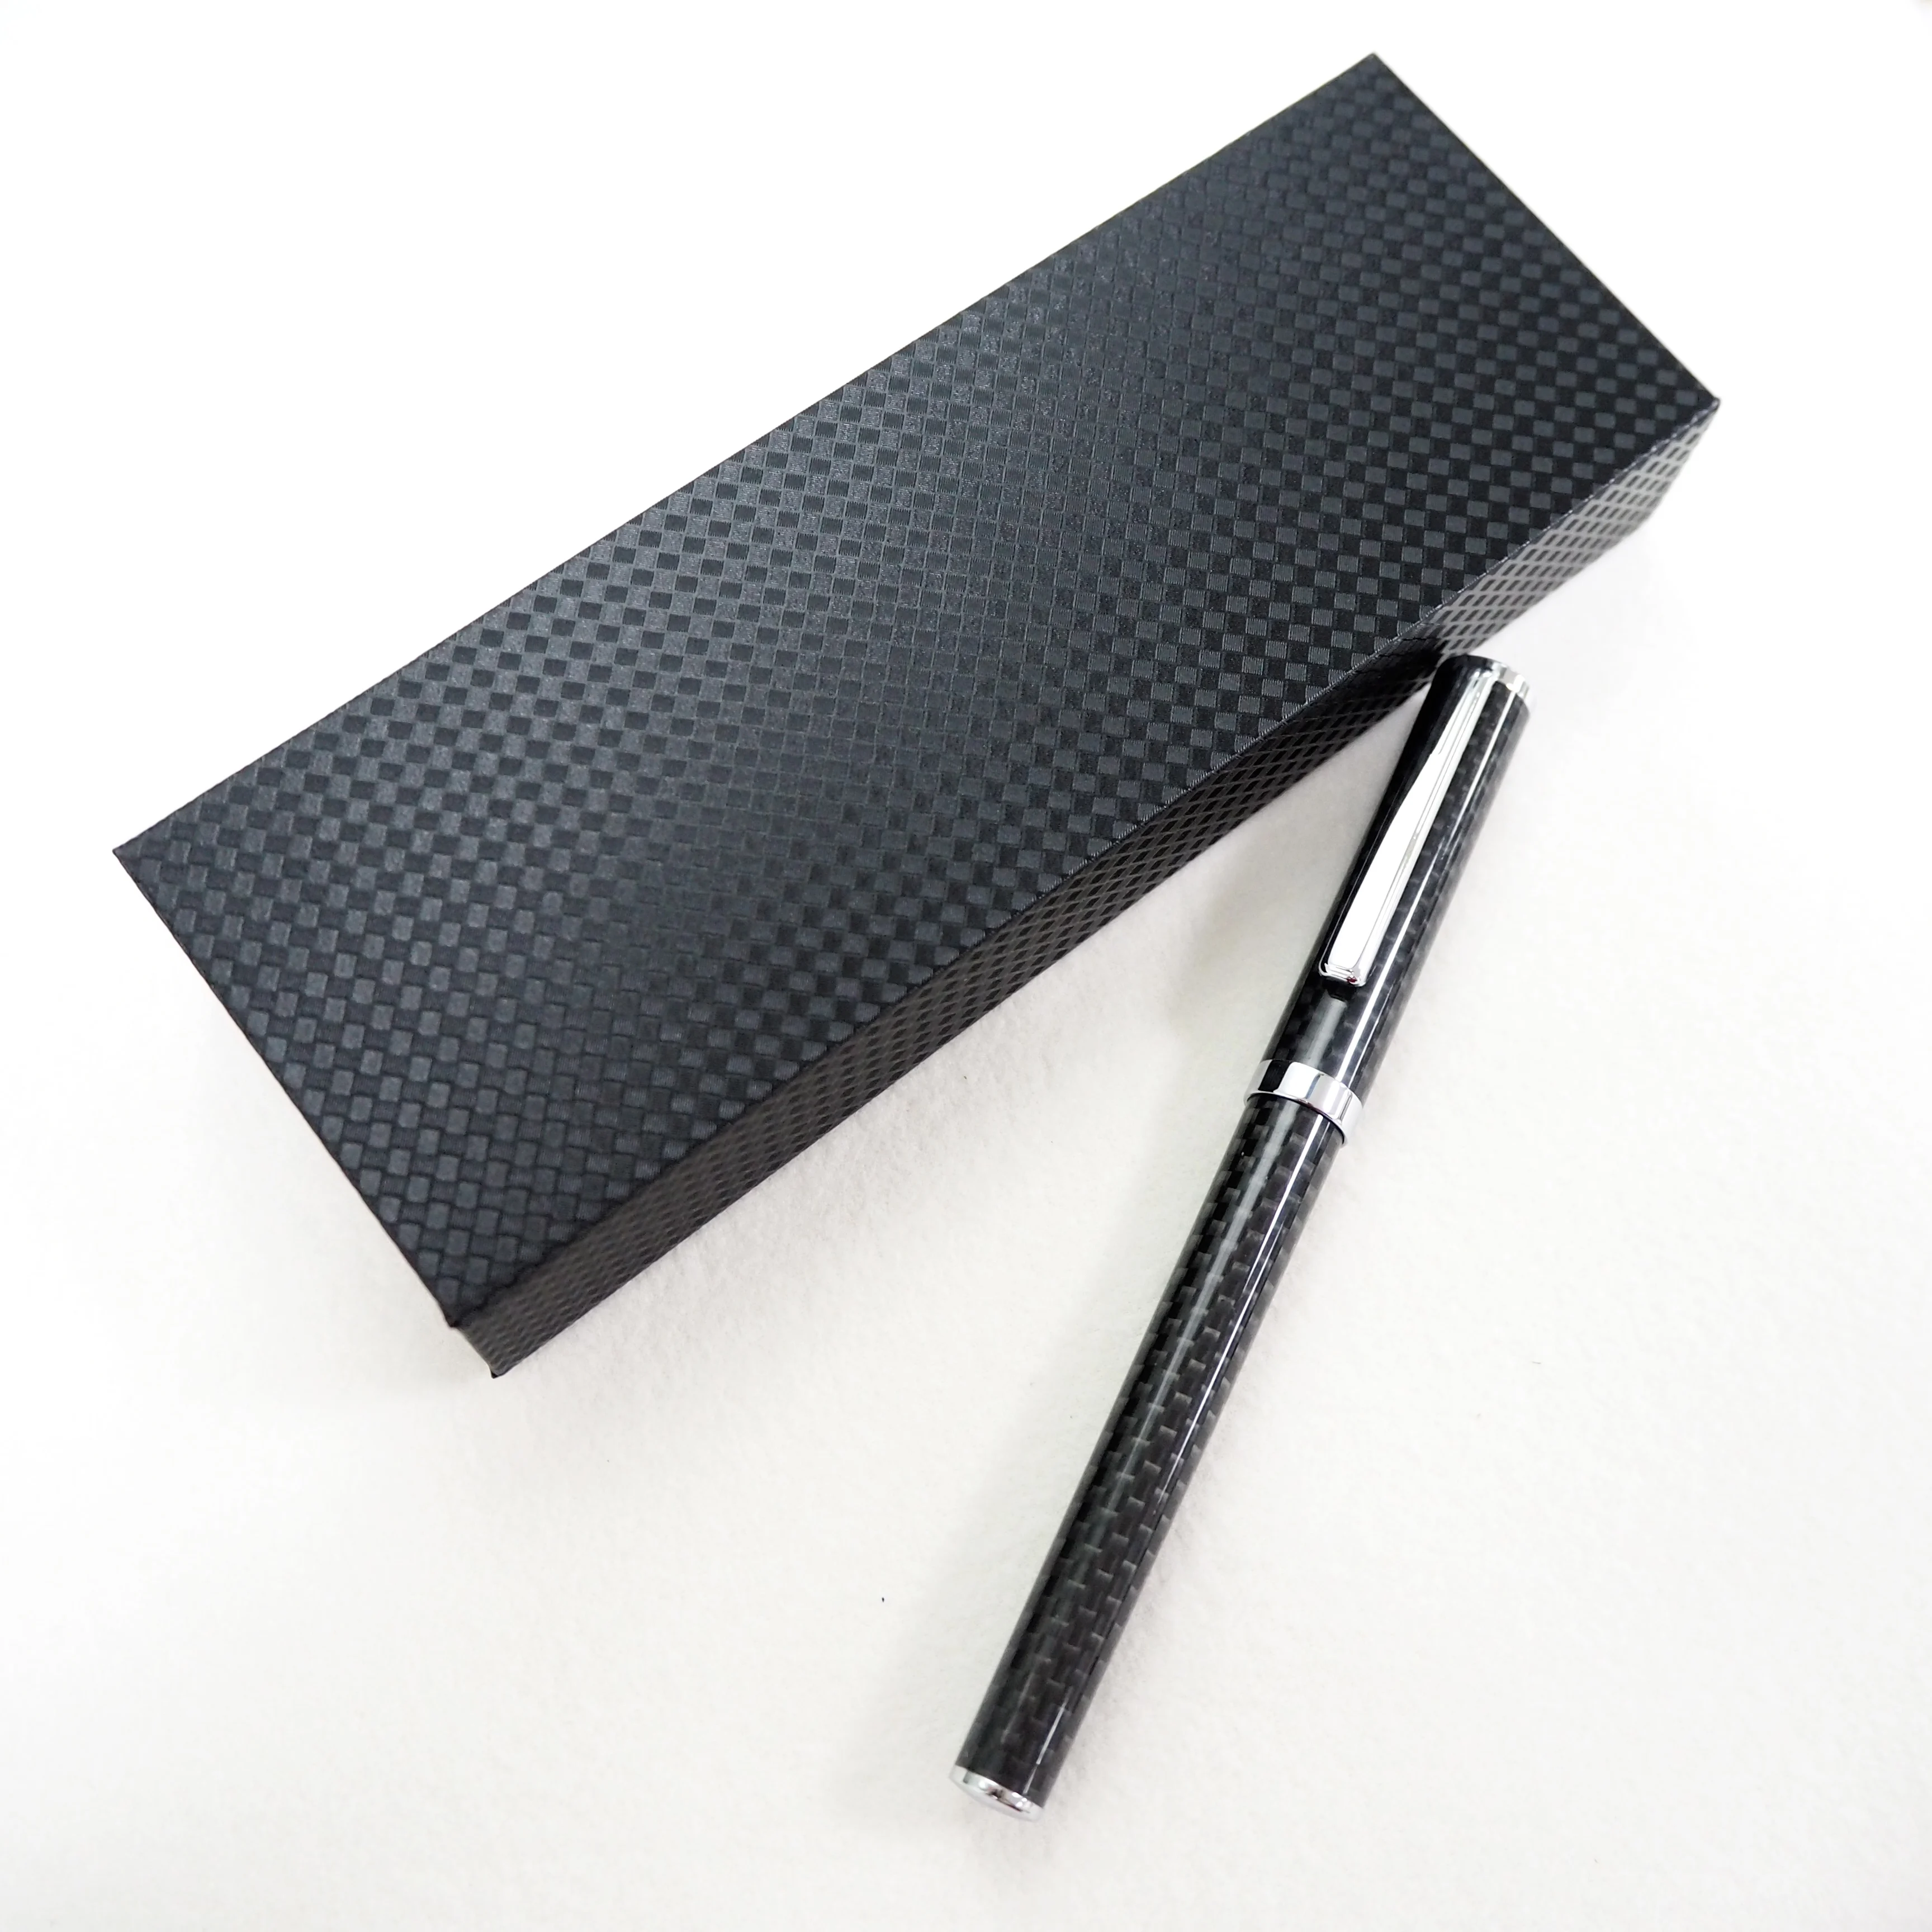 
Luxury Real Carbon fiber Roller ball Pen with Schneider Topball 850 Gel ink refill 